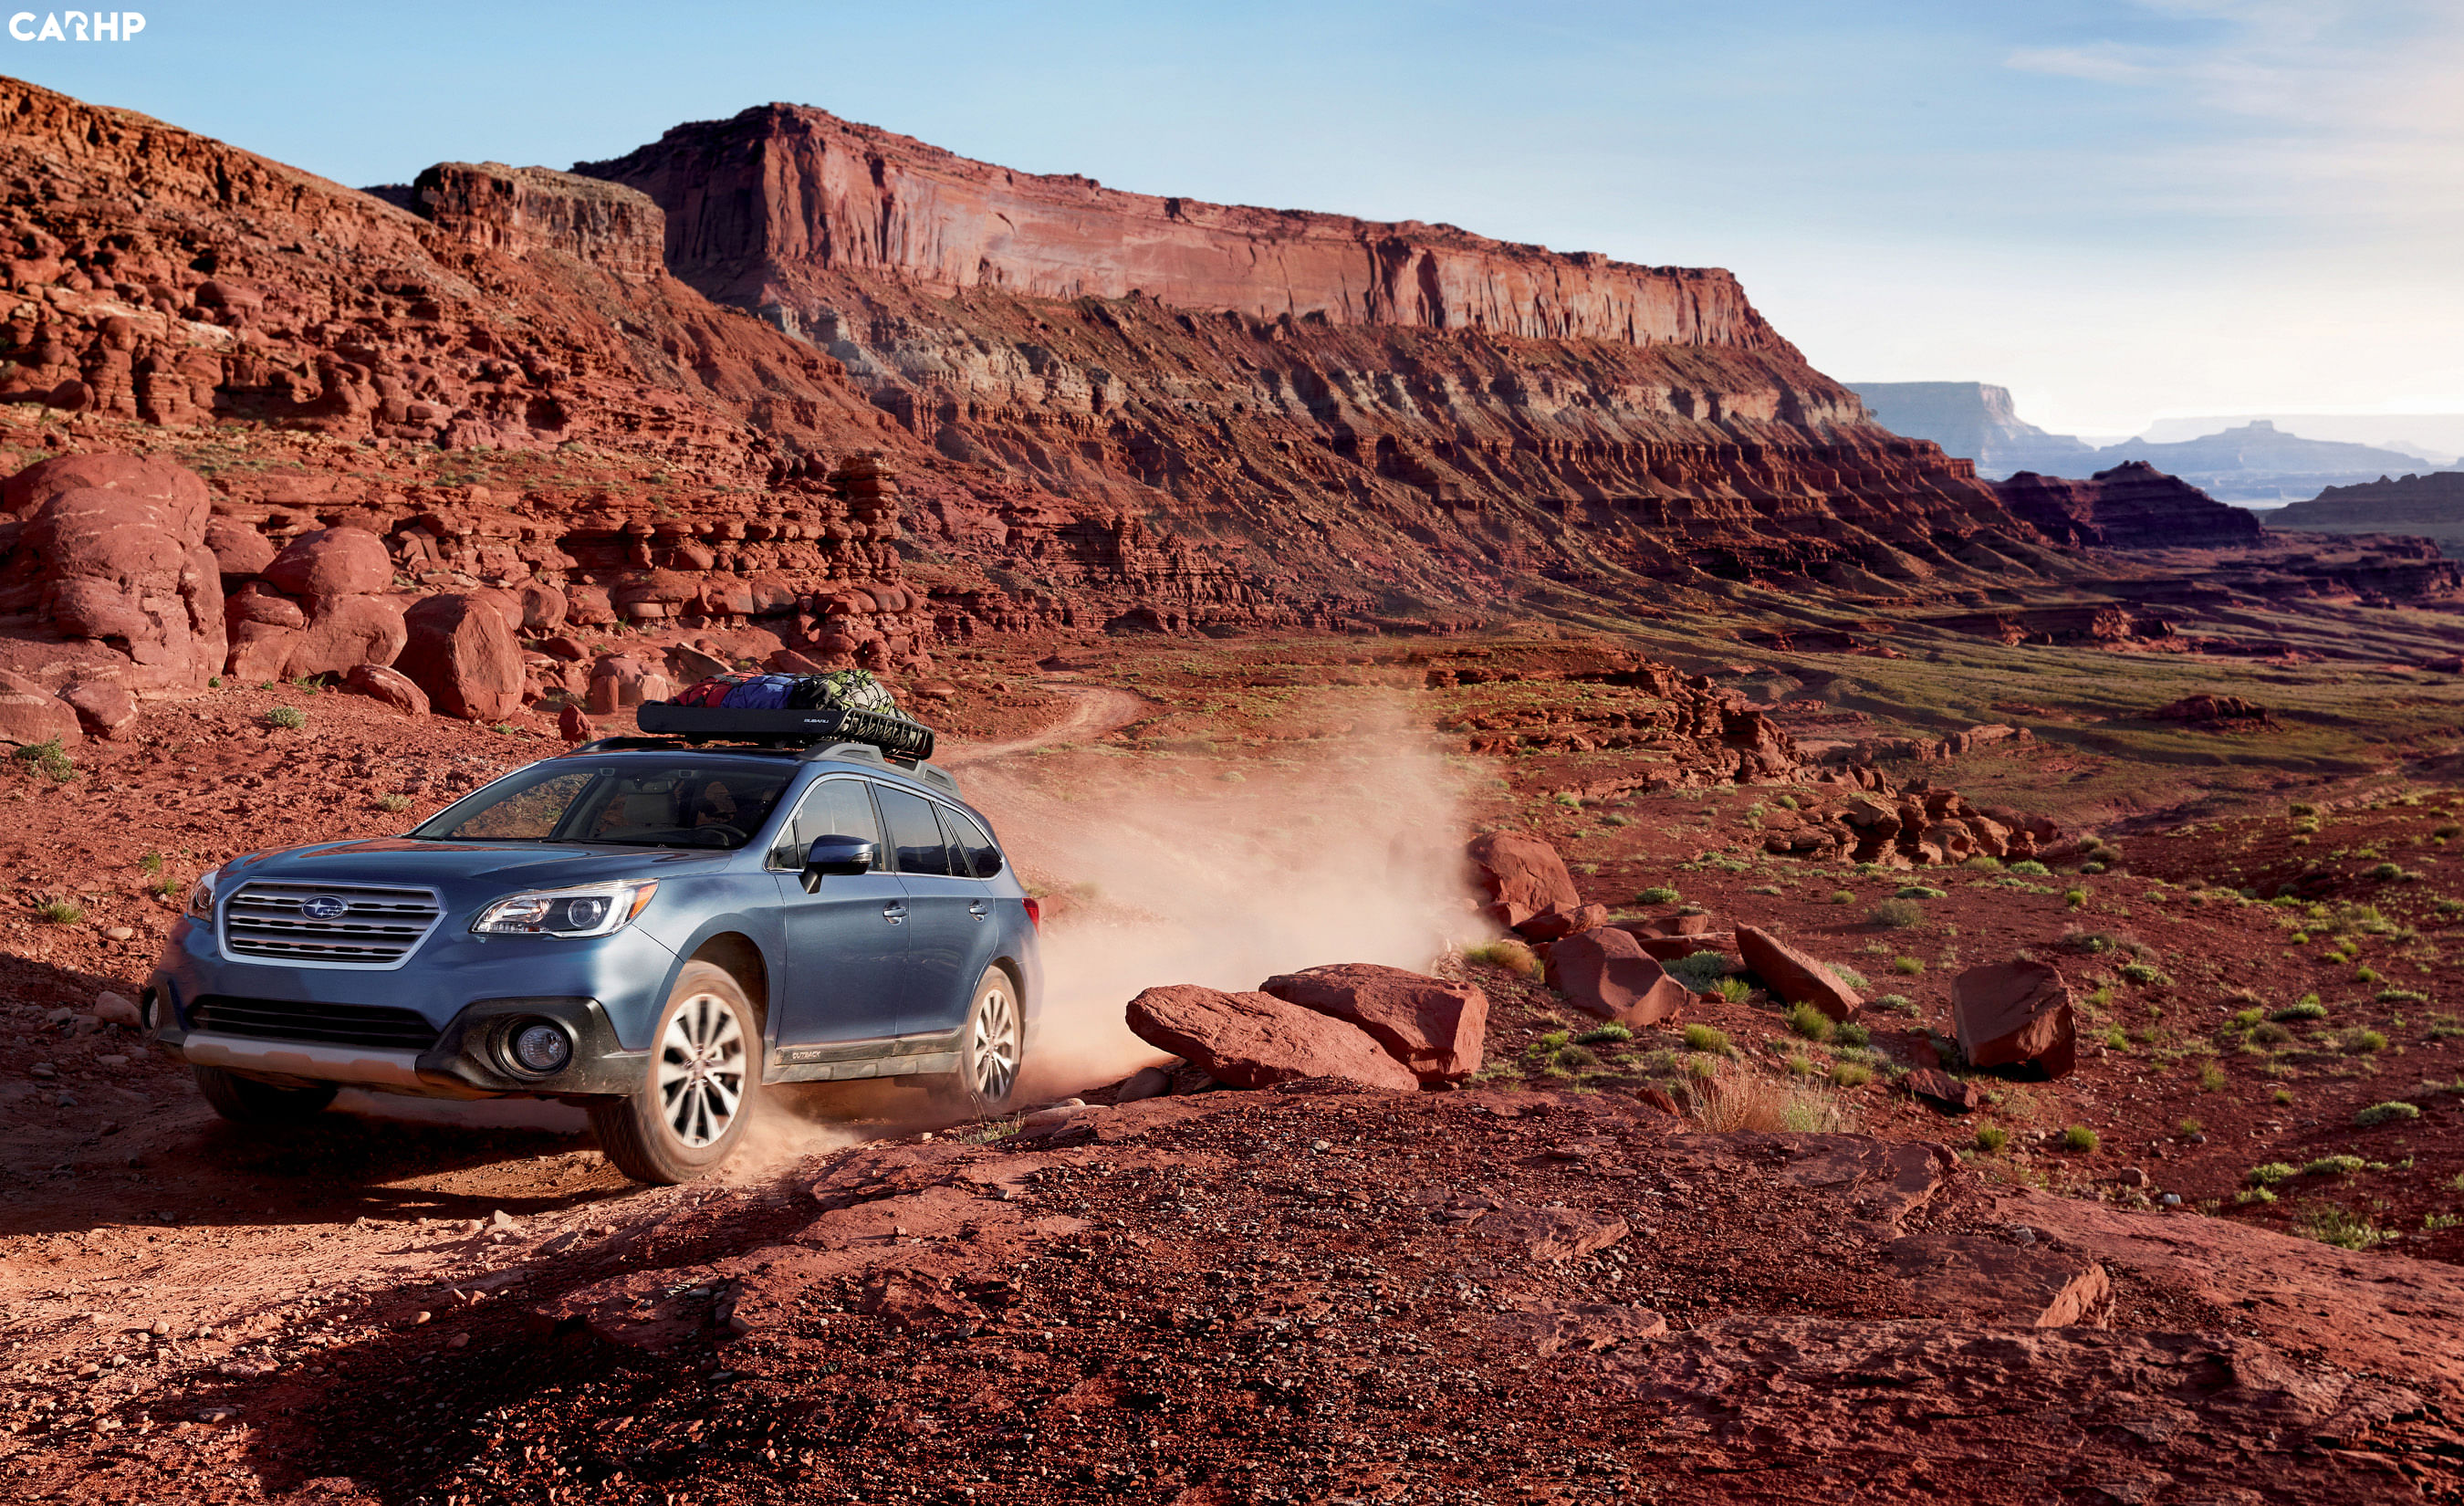 2016 Subaru Outback Towing Capacity CARHP